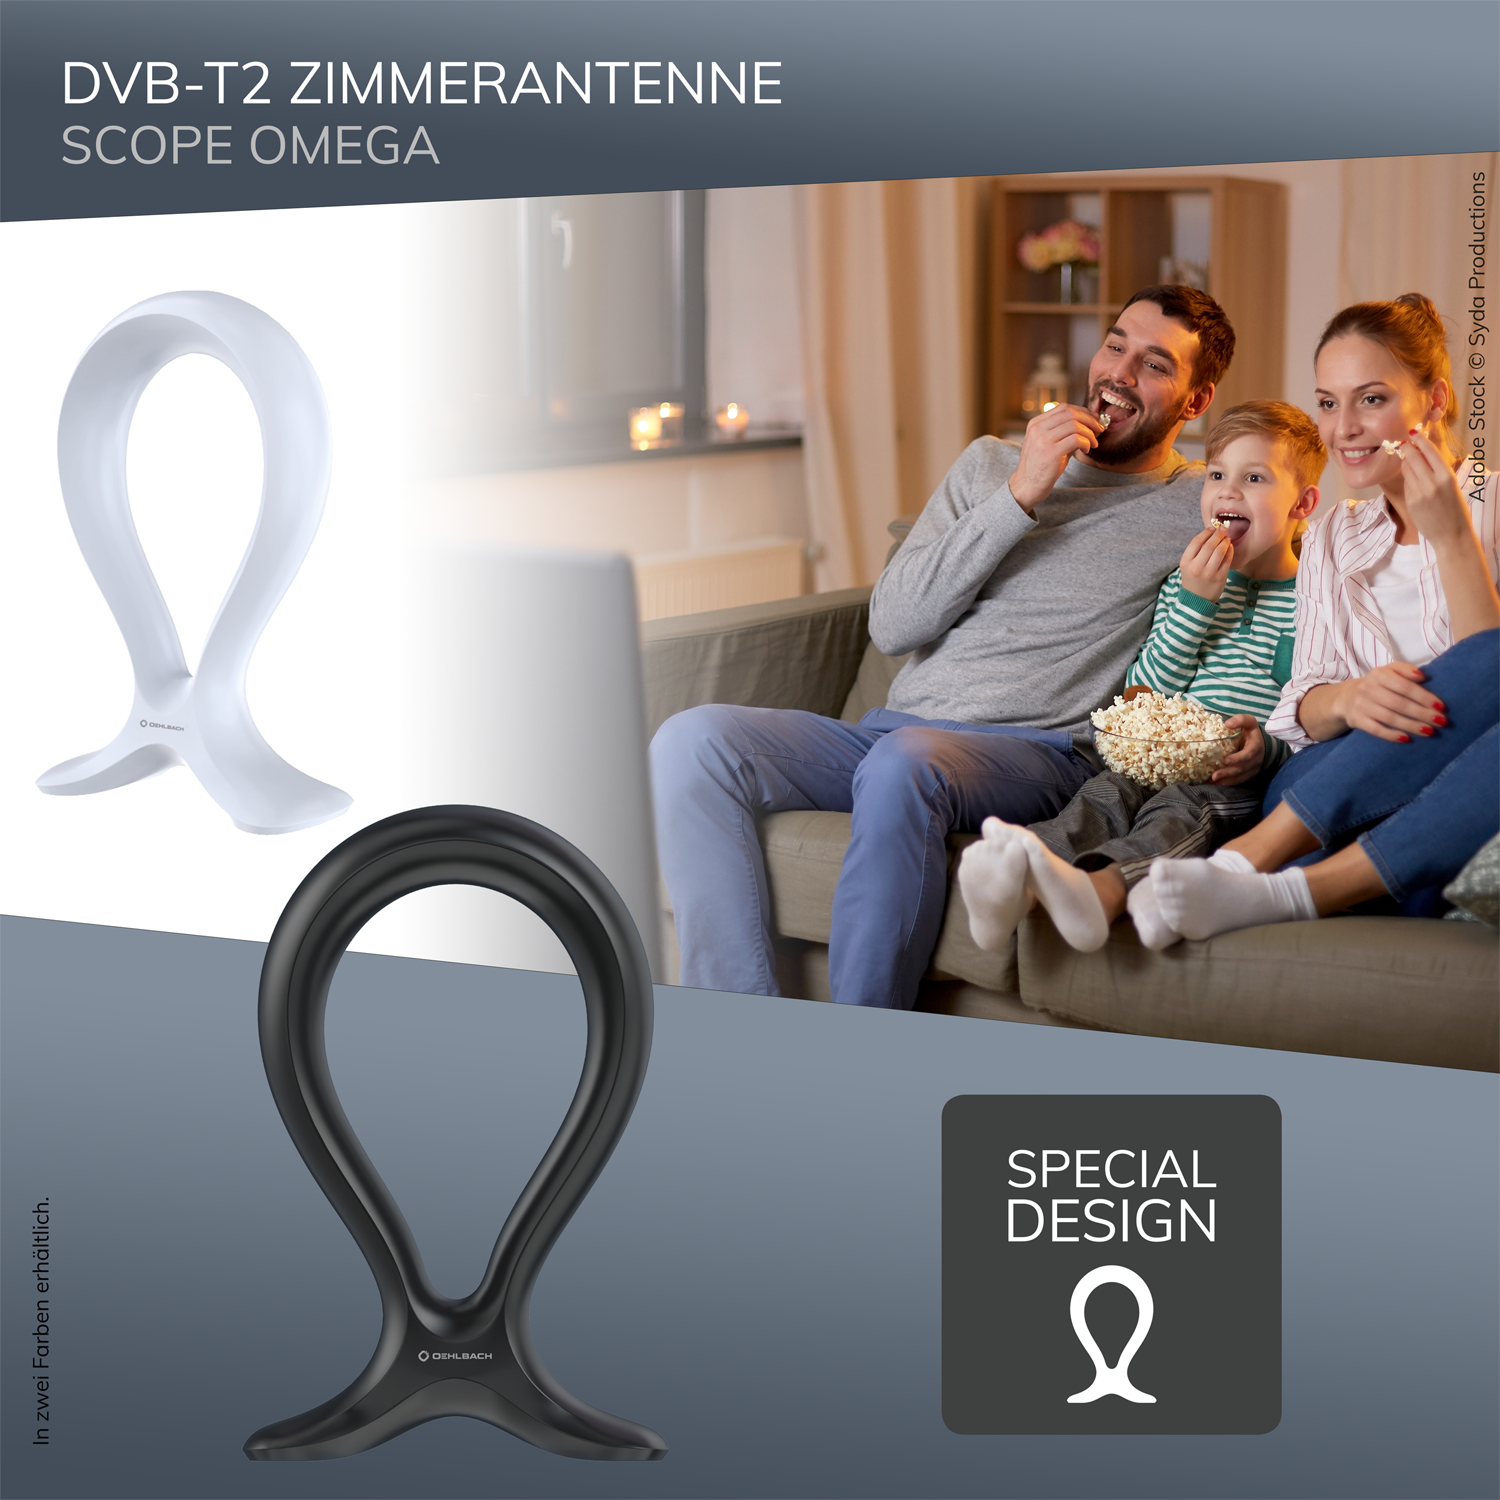 OEHLBACH SCOPE OMEGA DVB-T2 Zimmerantenne SCHWARZ DVB-T2 HD ANTENNE